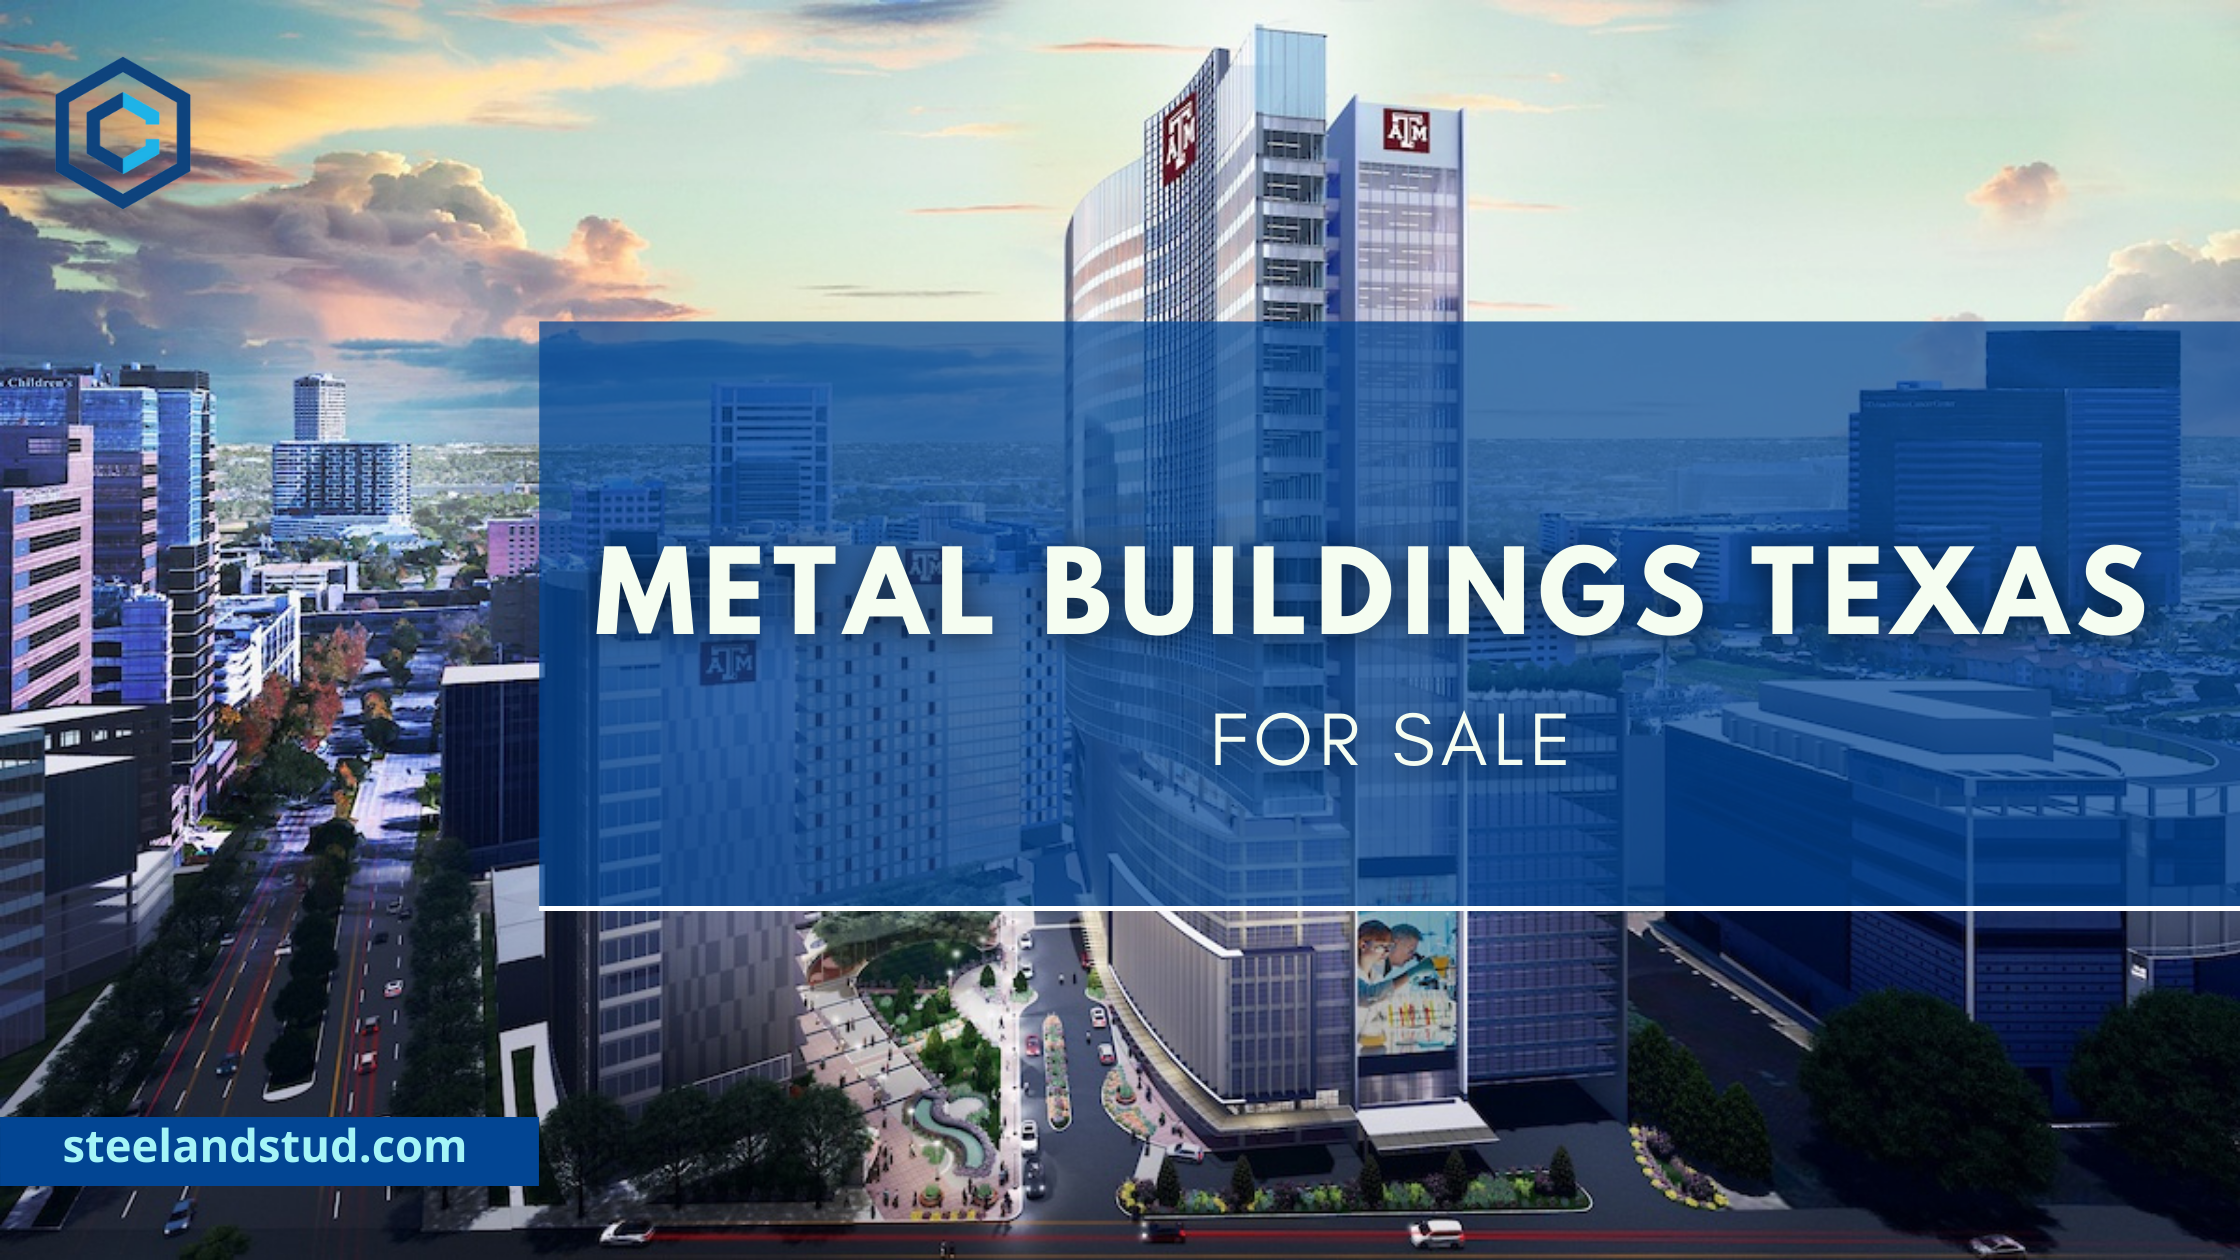 Metal Buildings Texas: For Sale